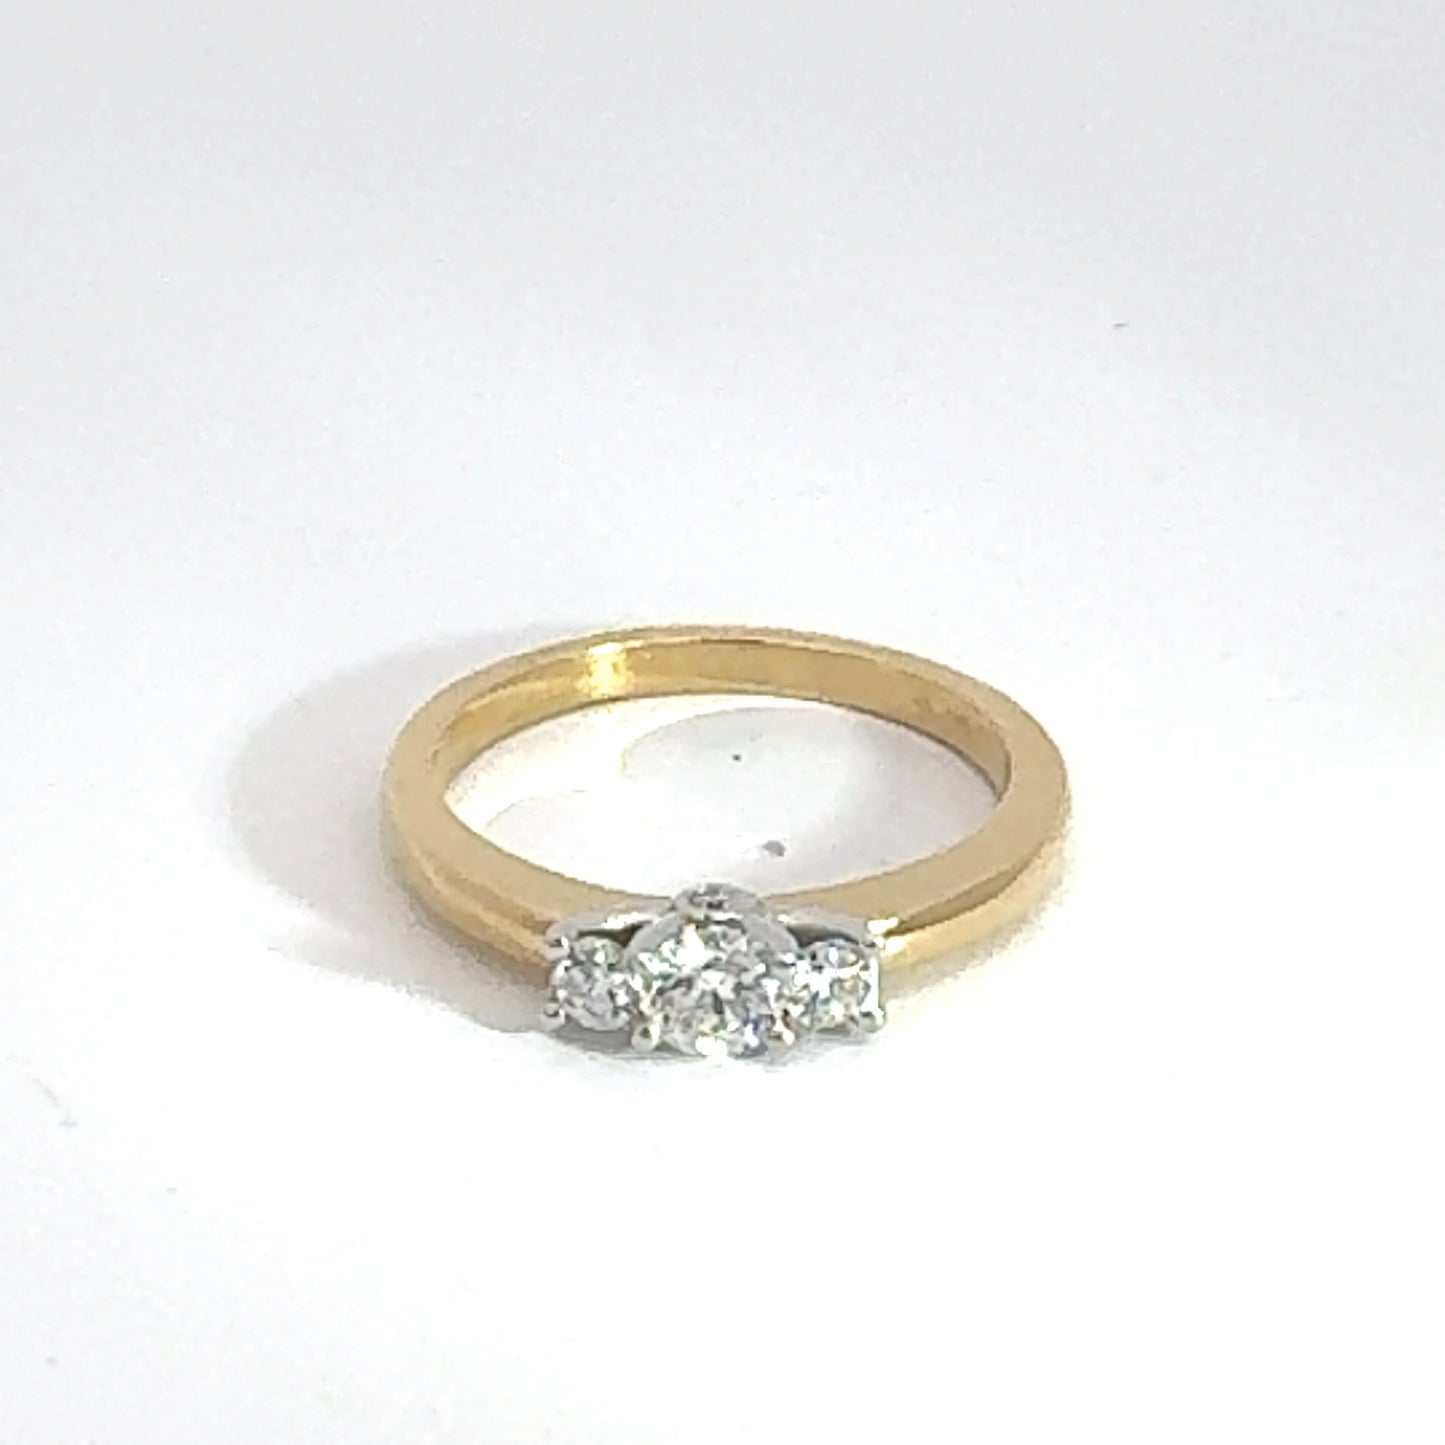 18ct Yellow Gold 3 Stone Diamond Ring